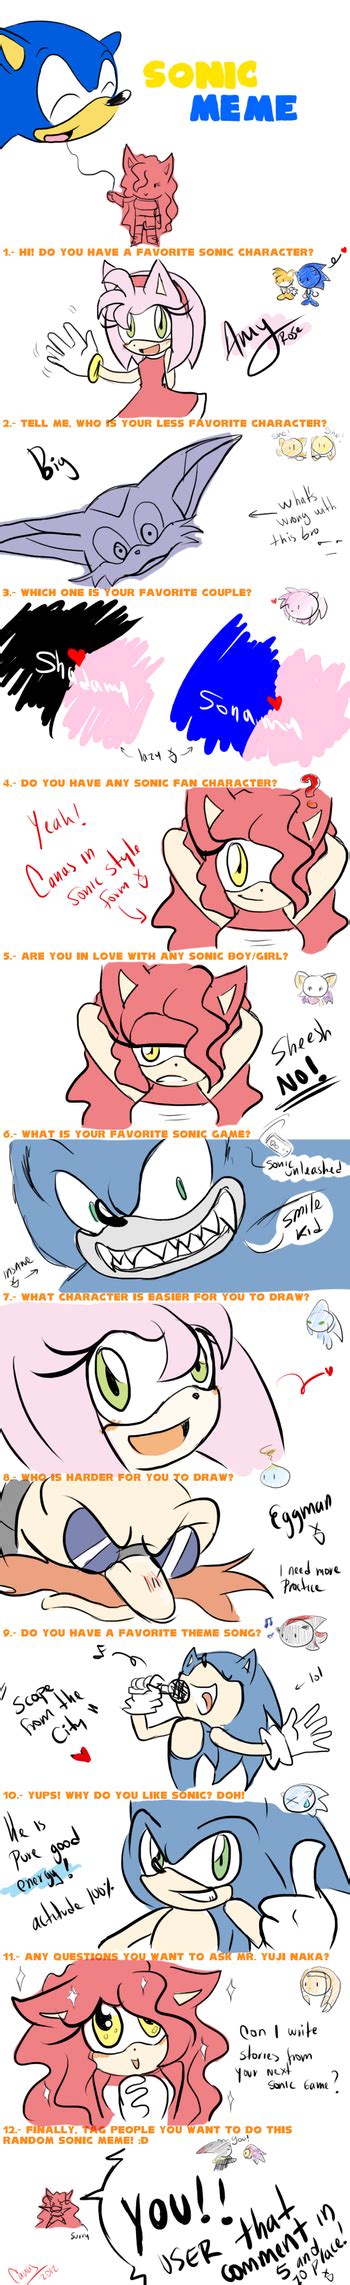 Doodle Sonic Meme By Cardonanavas On Deviantart